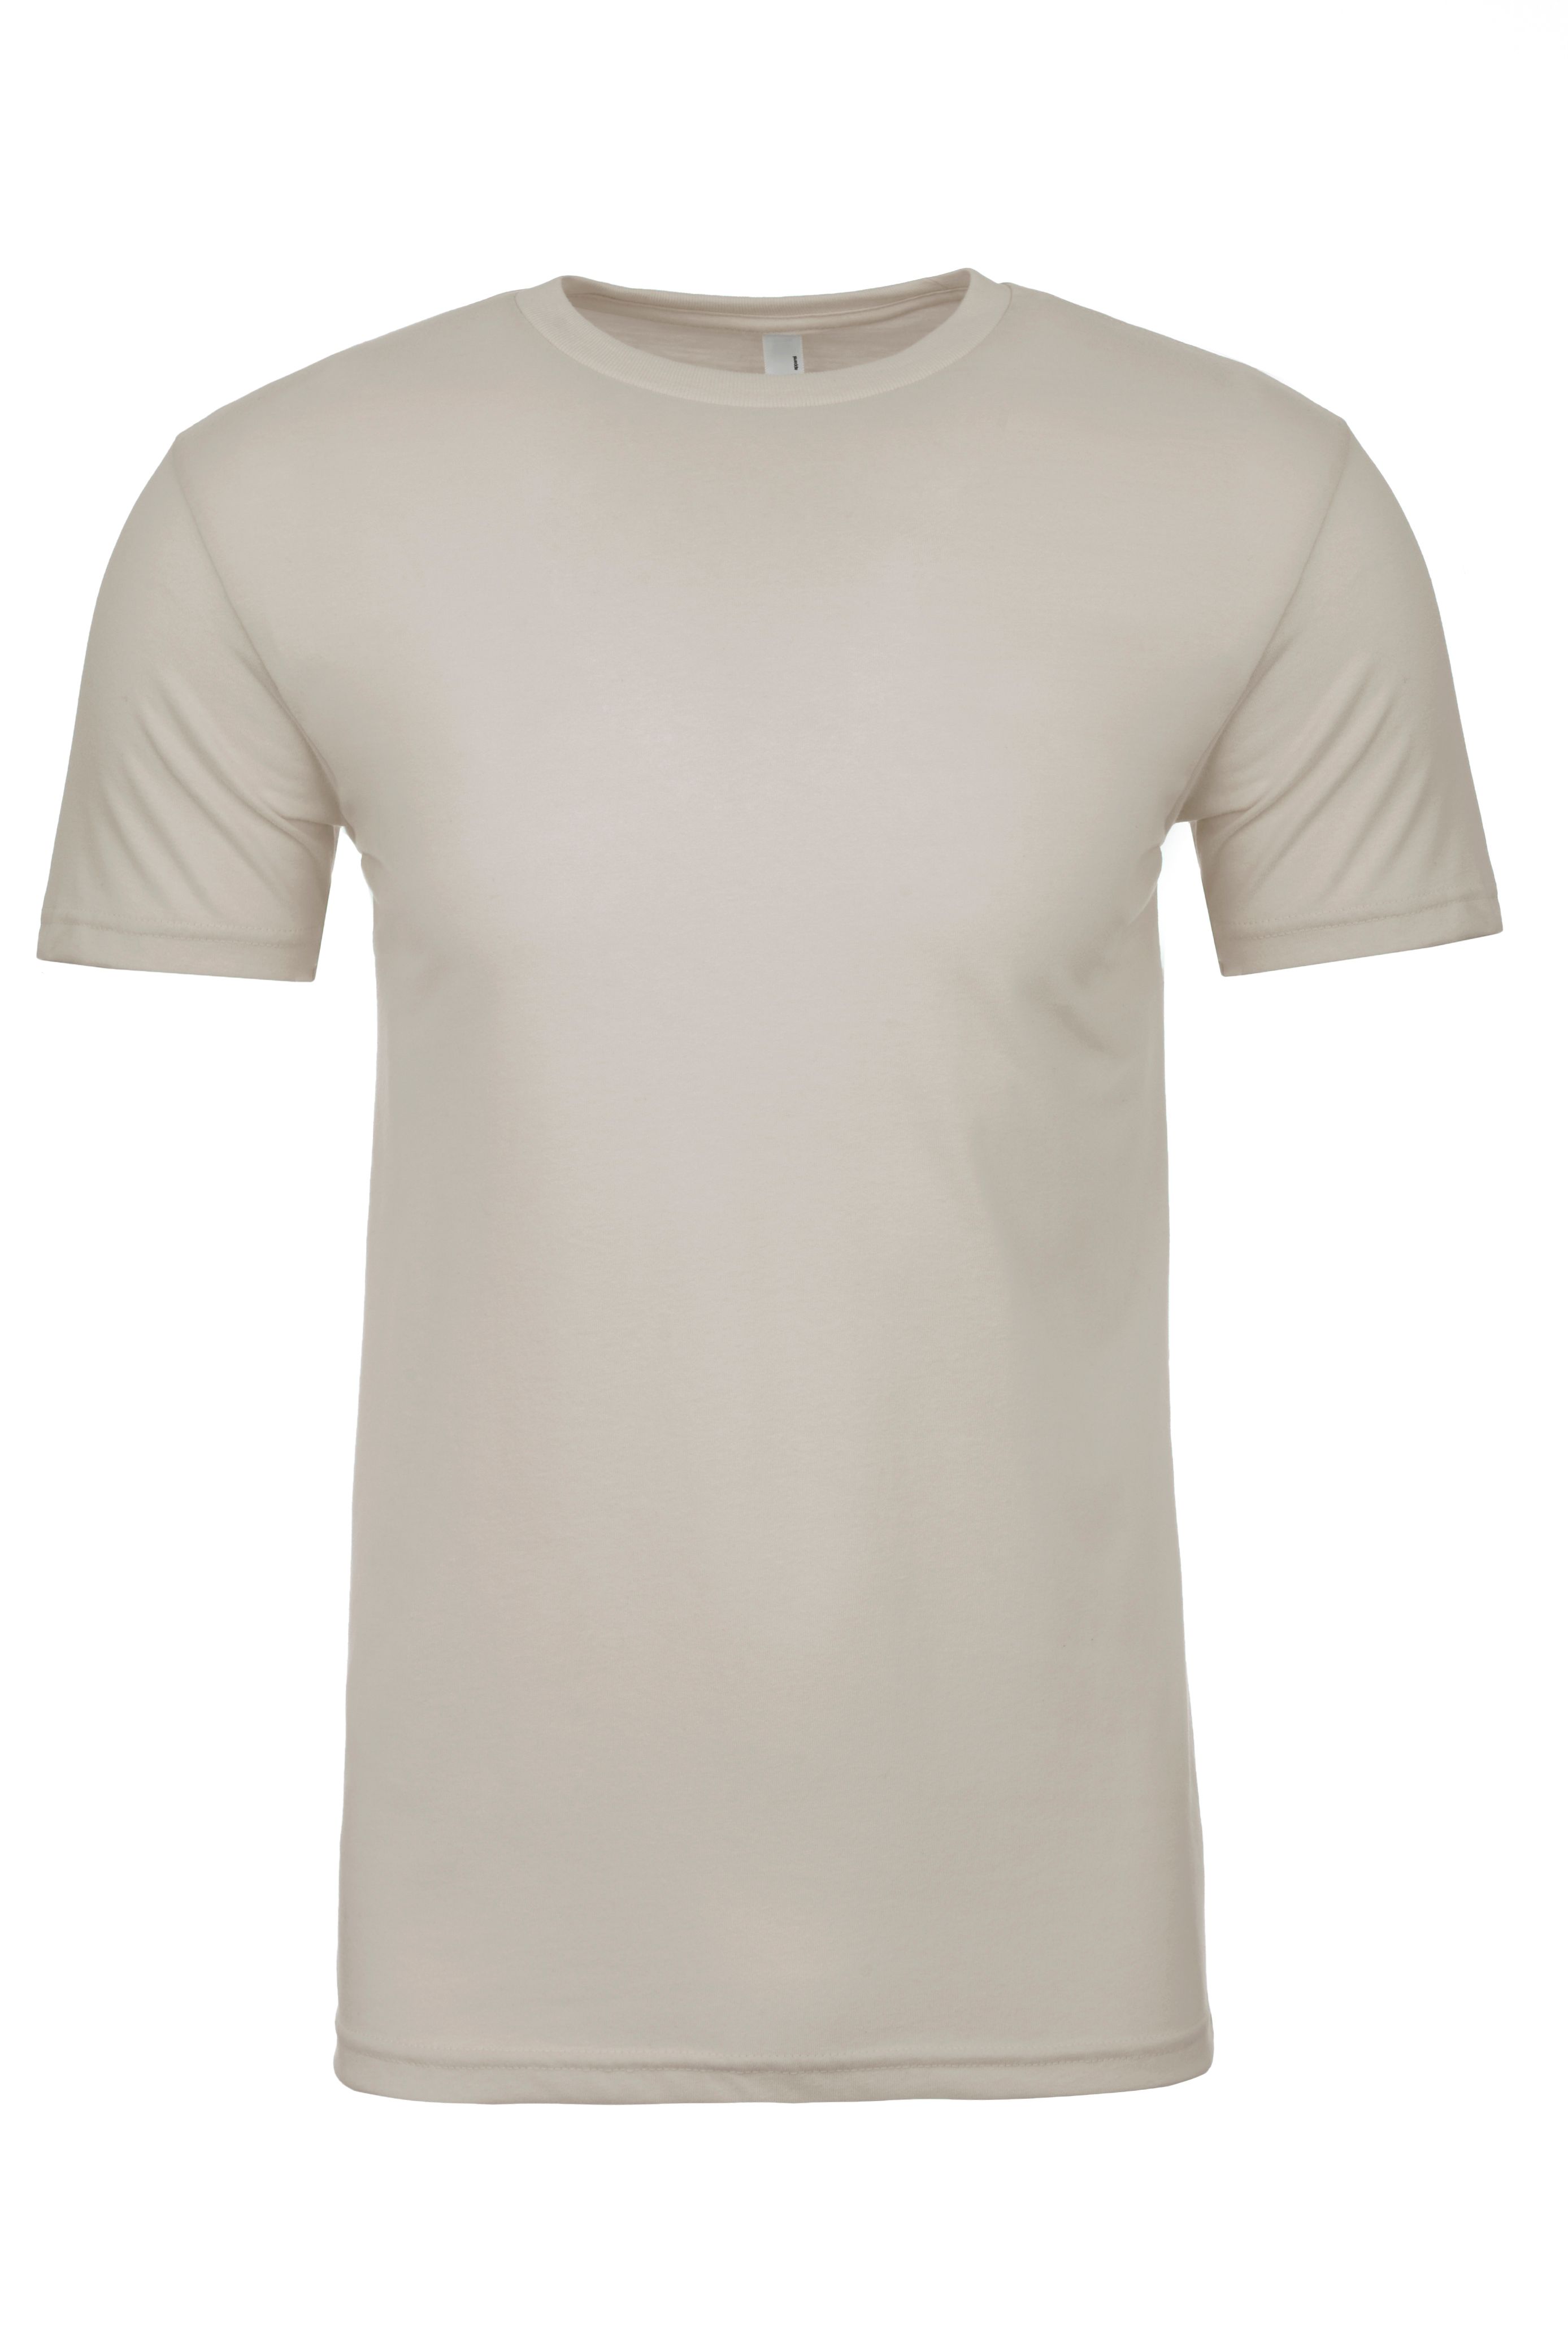 Next Level Apparel® 6410 Unisex Sueded T-Shirt